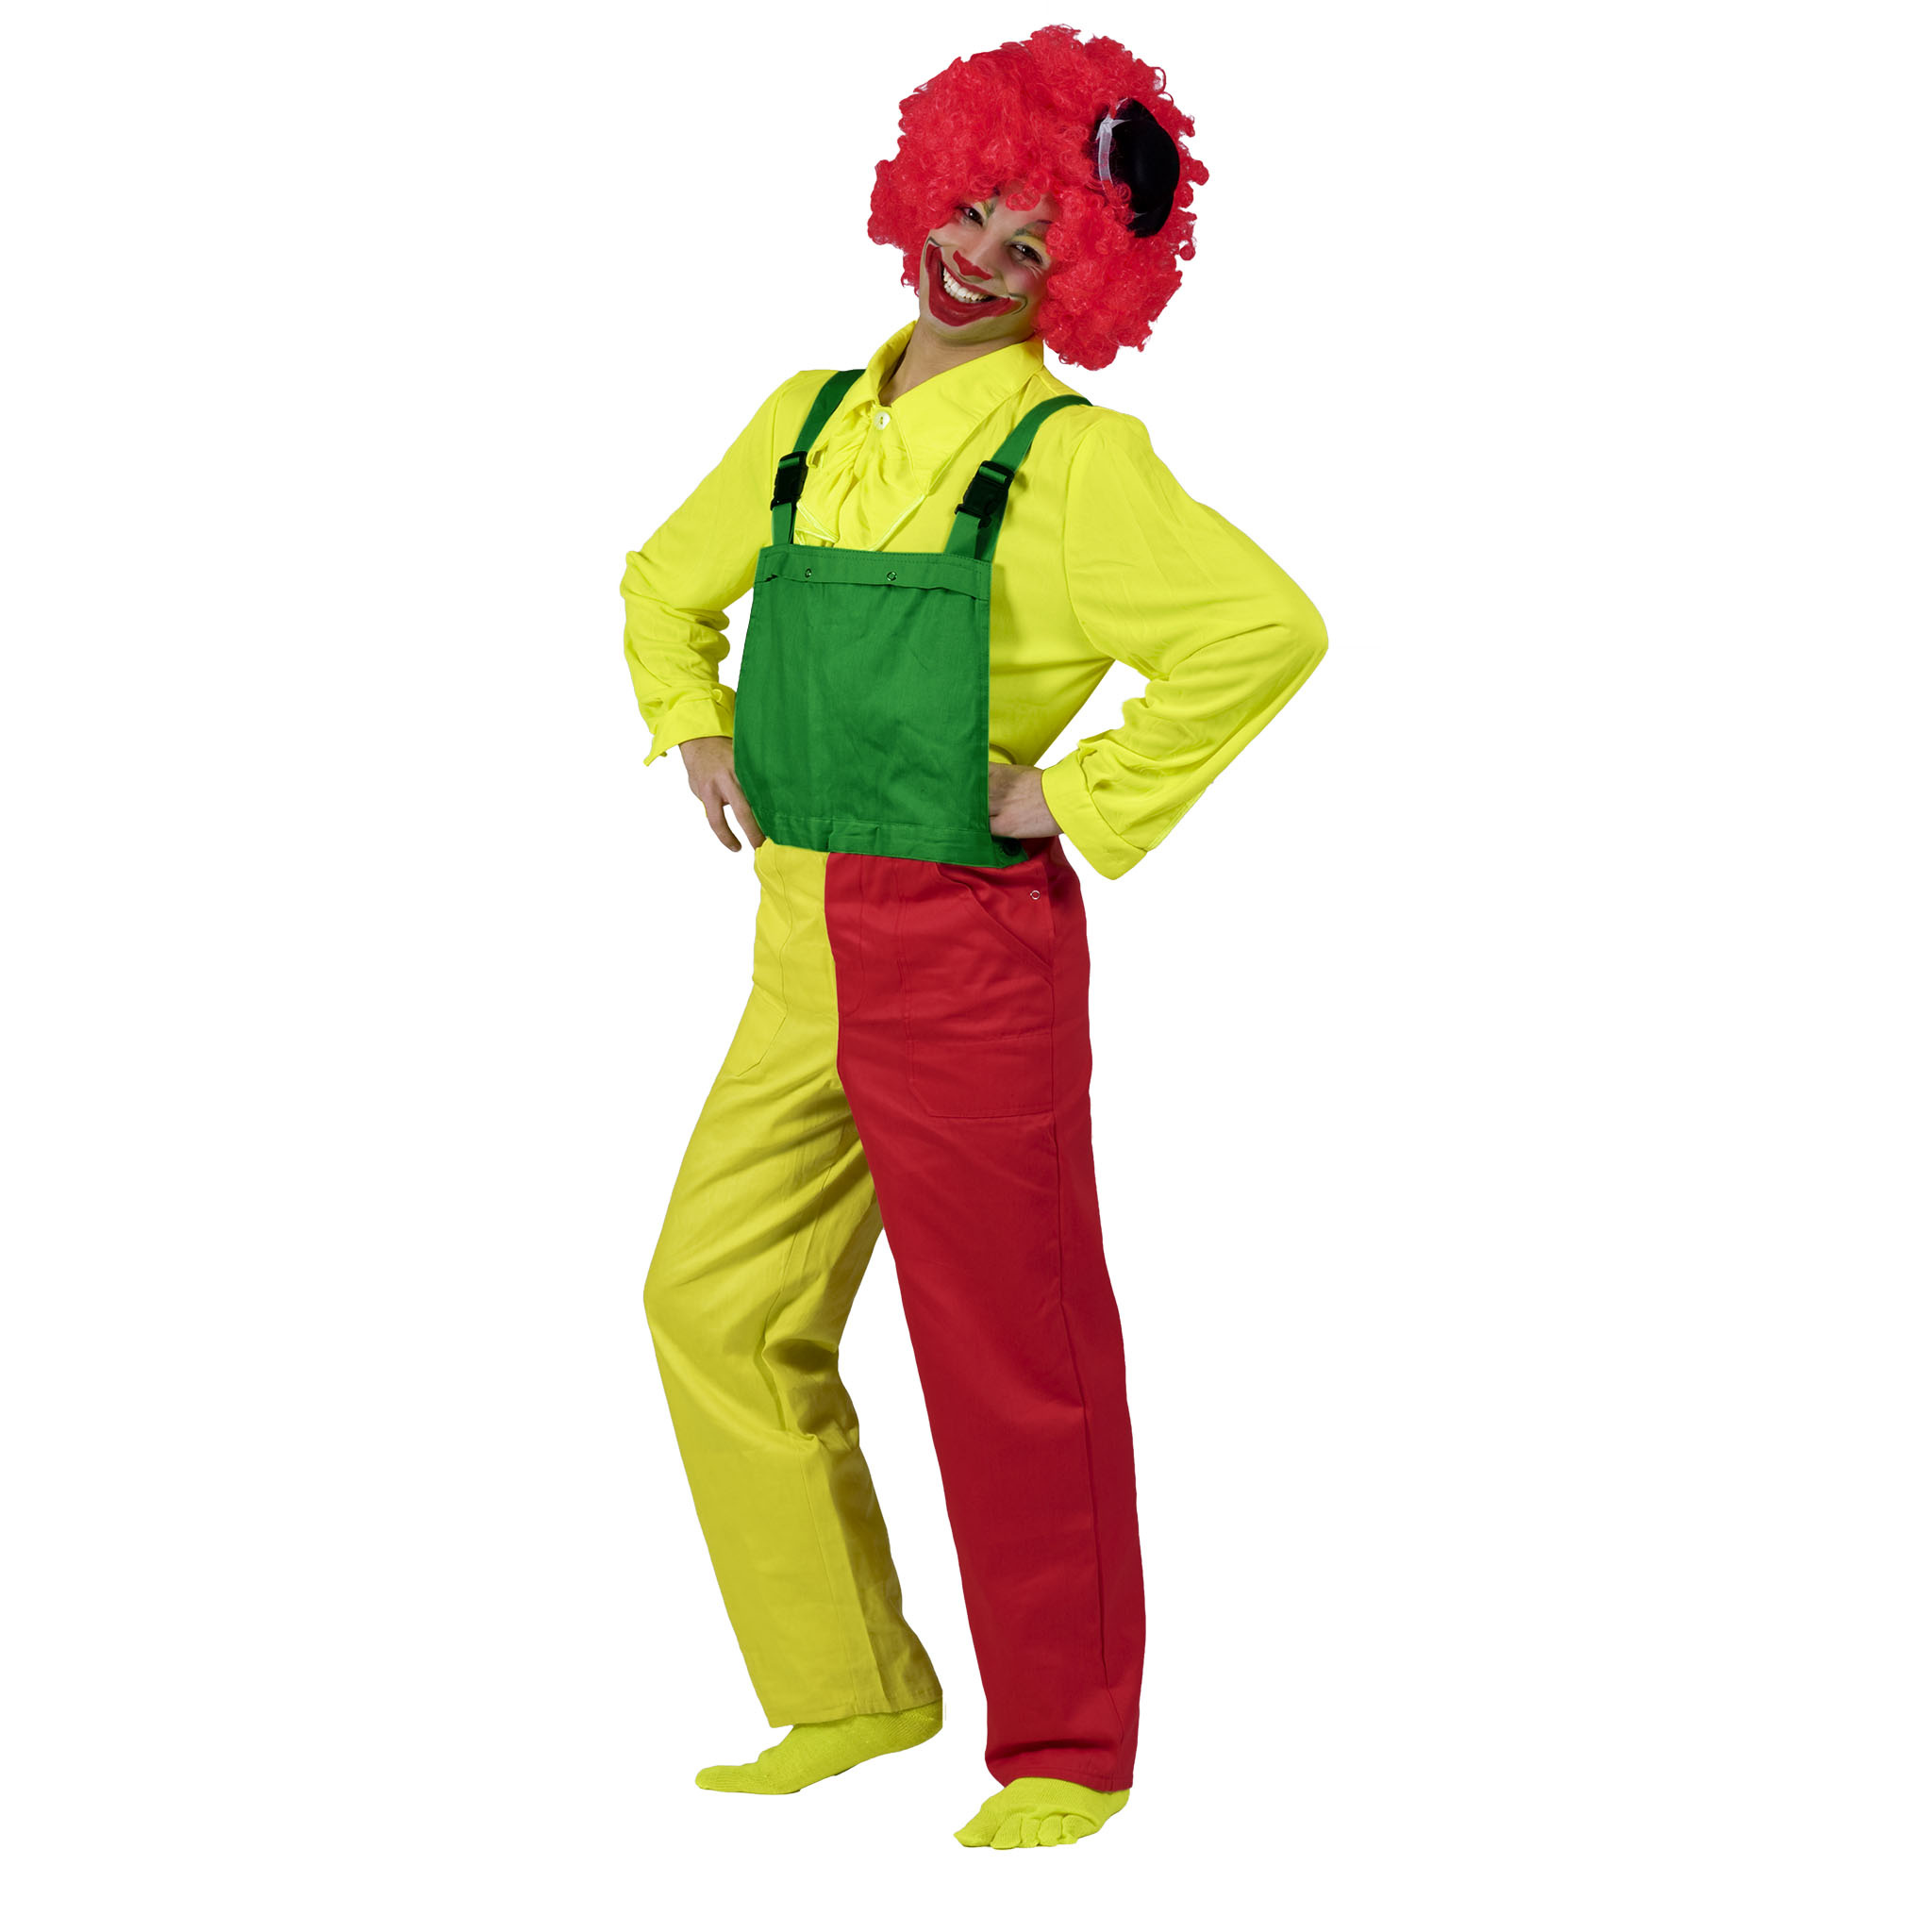 kleding Accumulatie Refrein Rood-groen-gele Limburgse carnavals overalls - e-Carnavalskleding